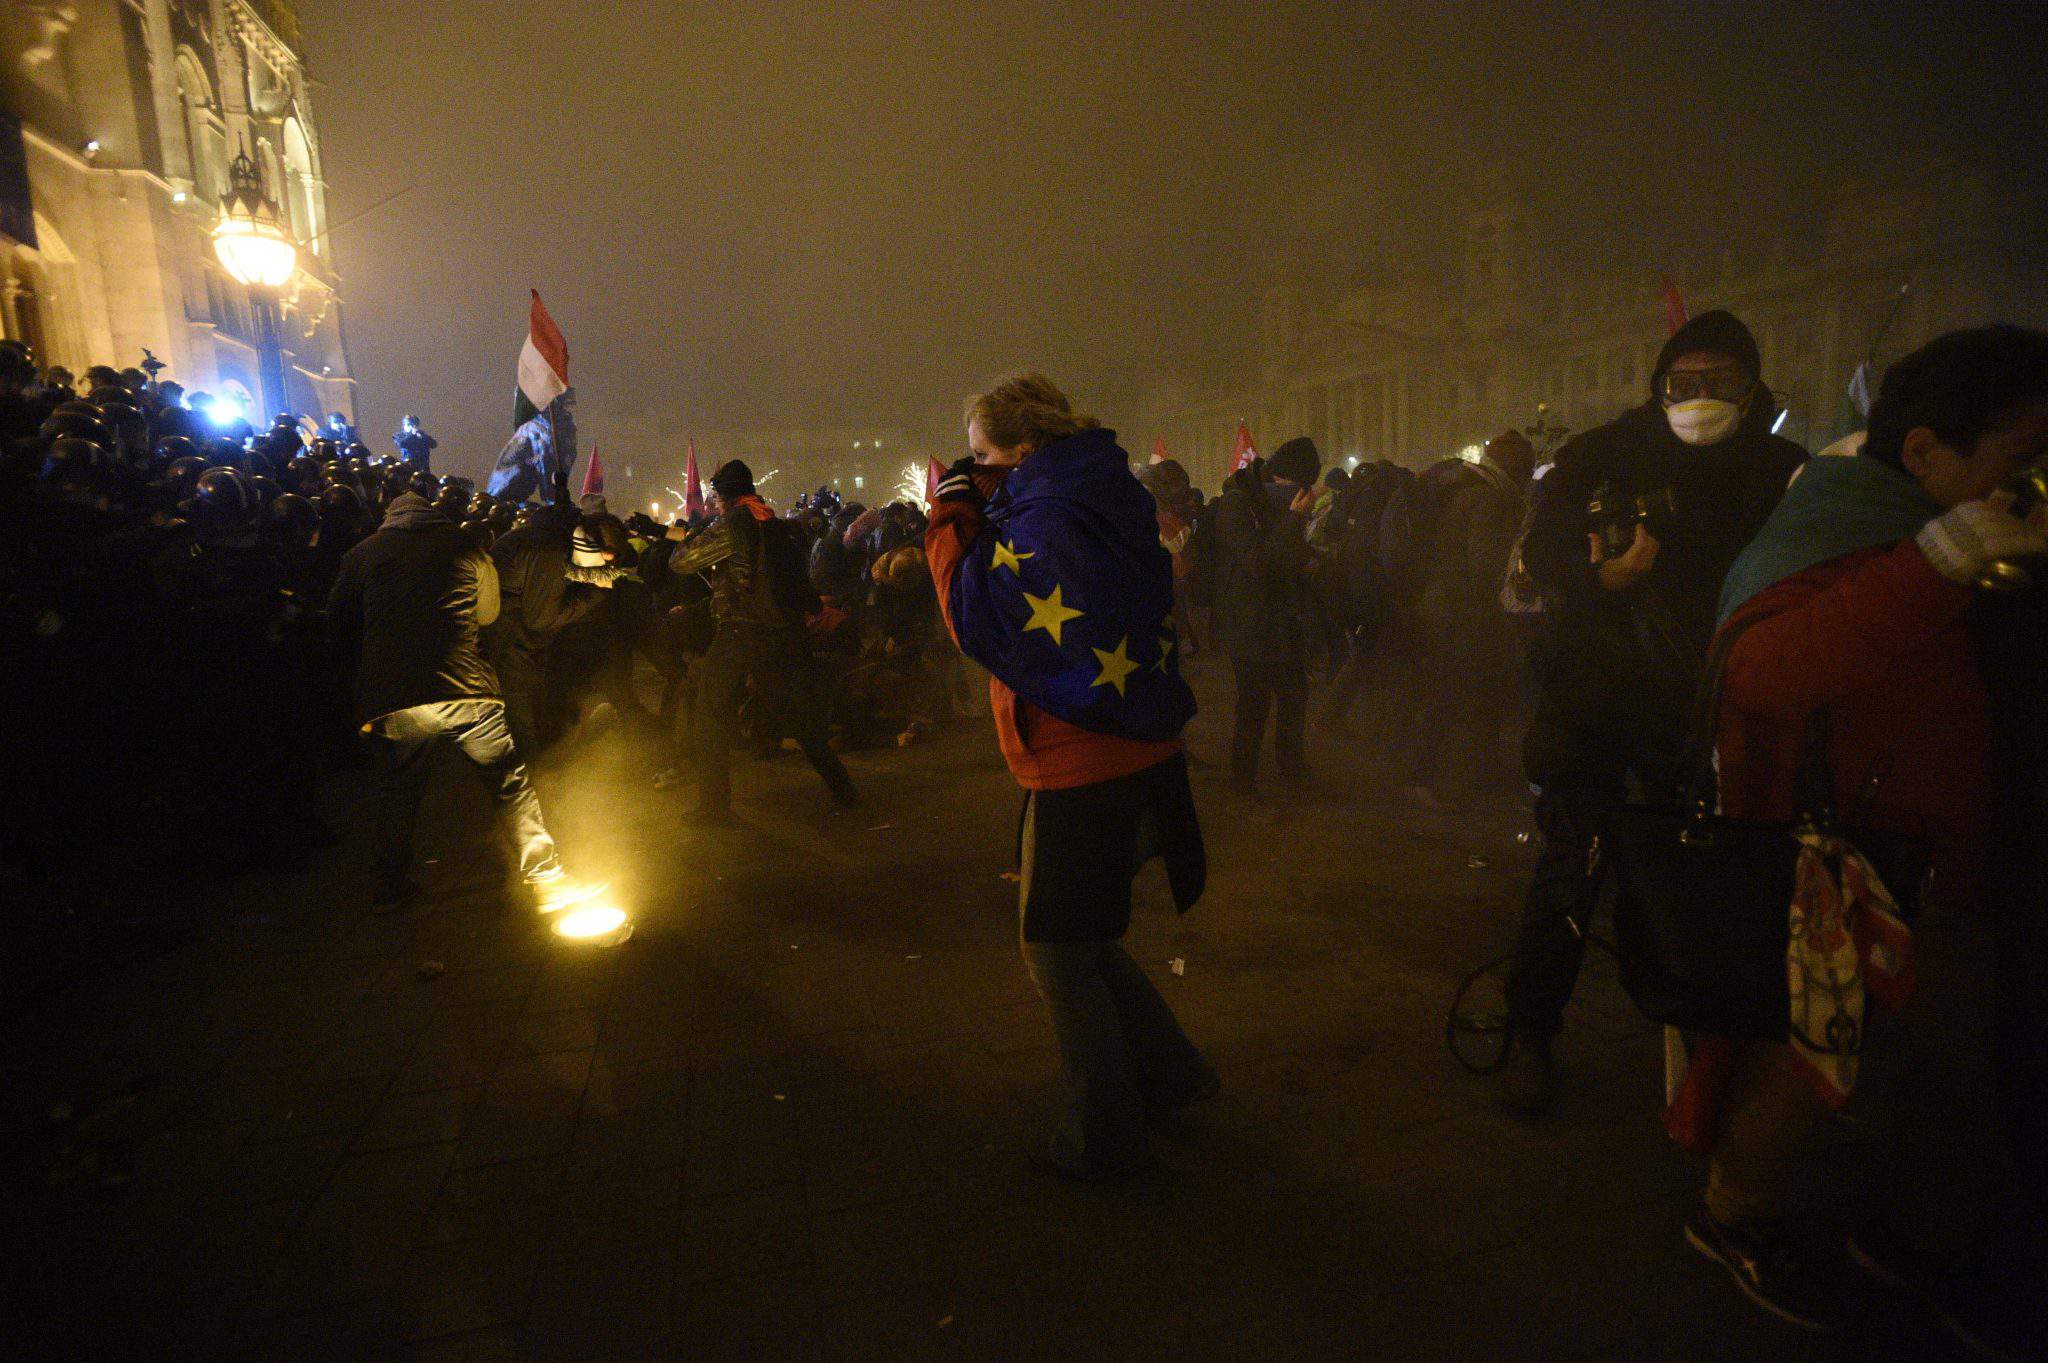 Demonstrators, police clash near the Hungarian Parliament - PHOTOS